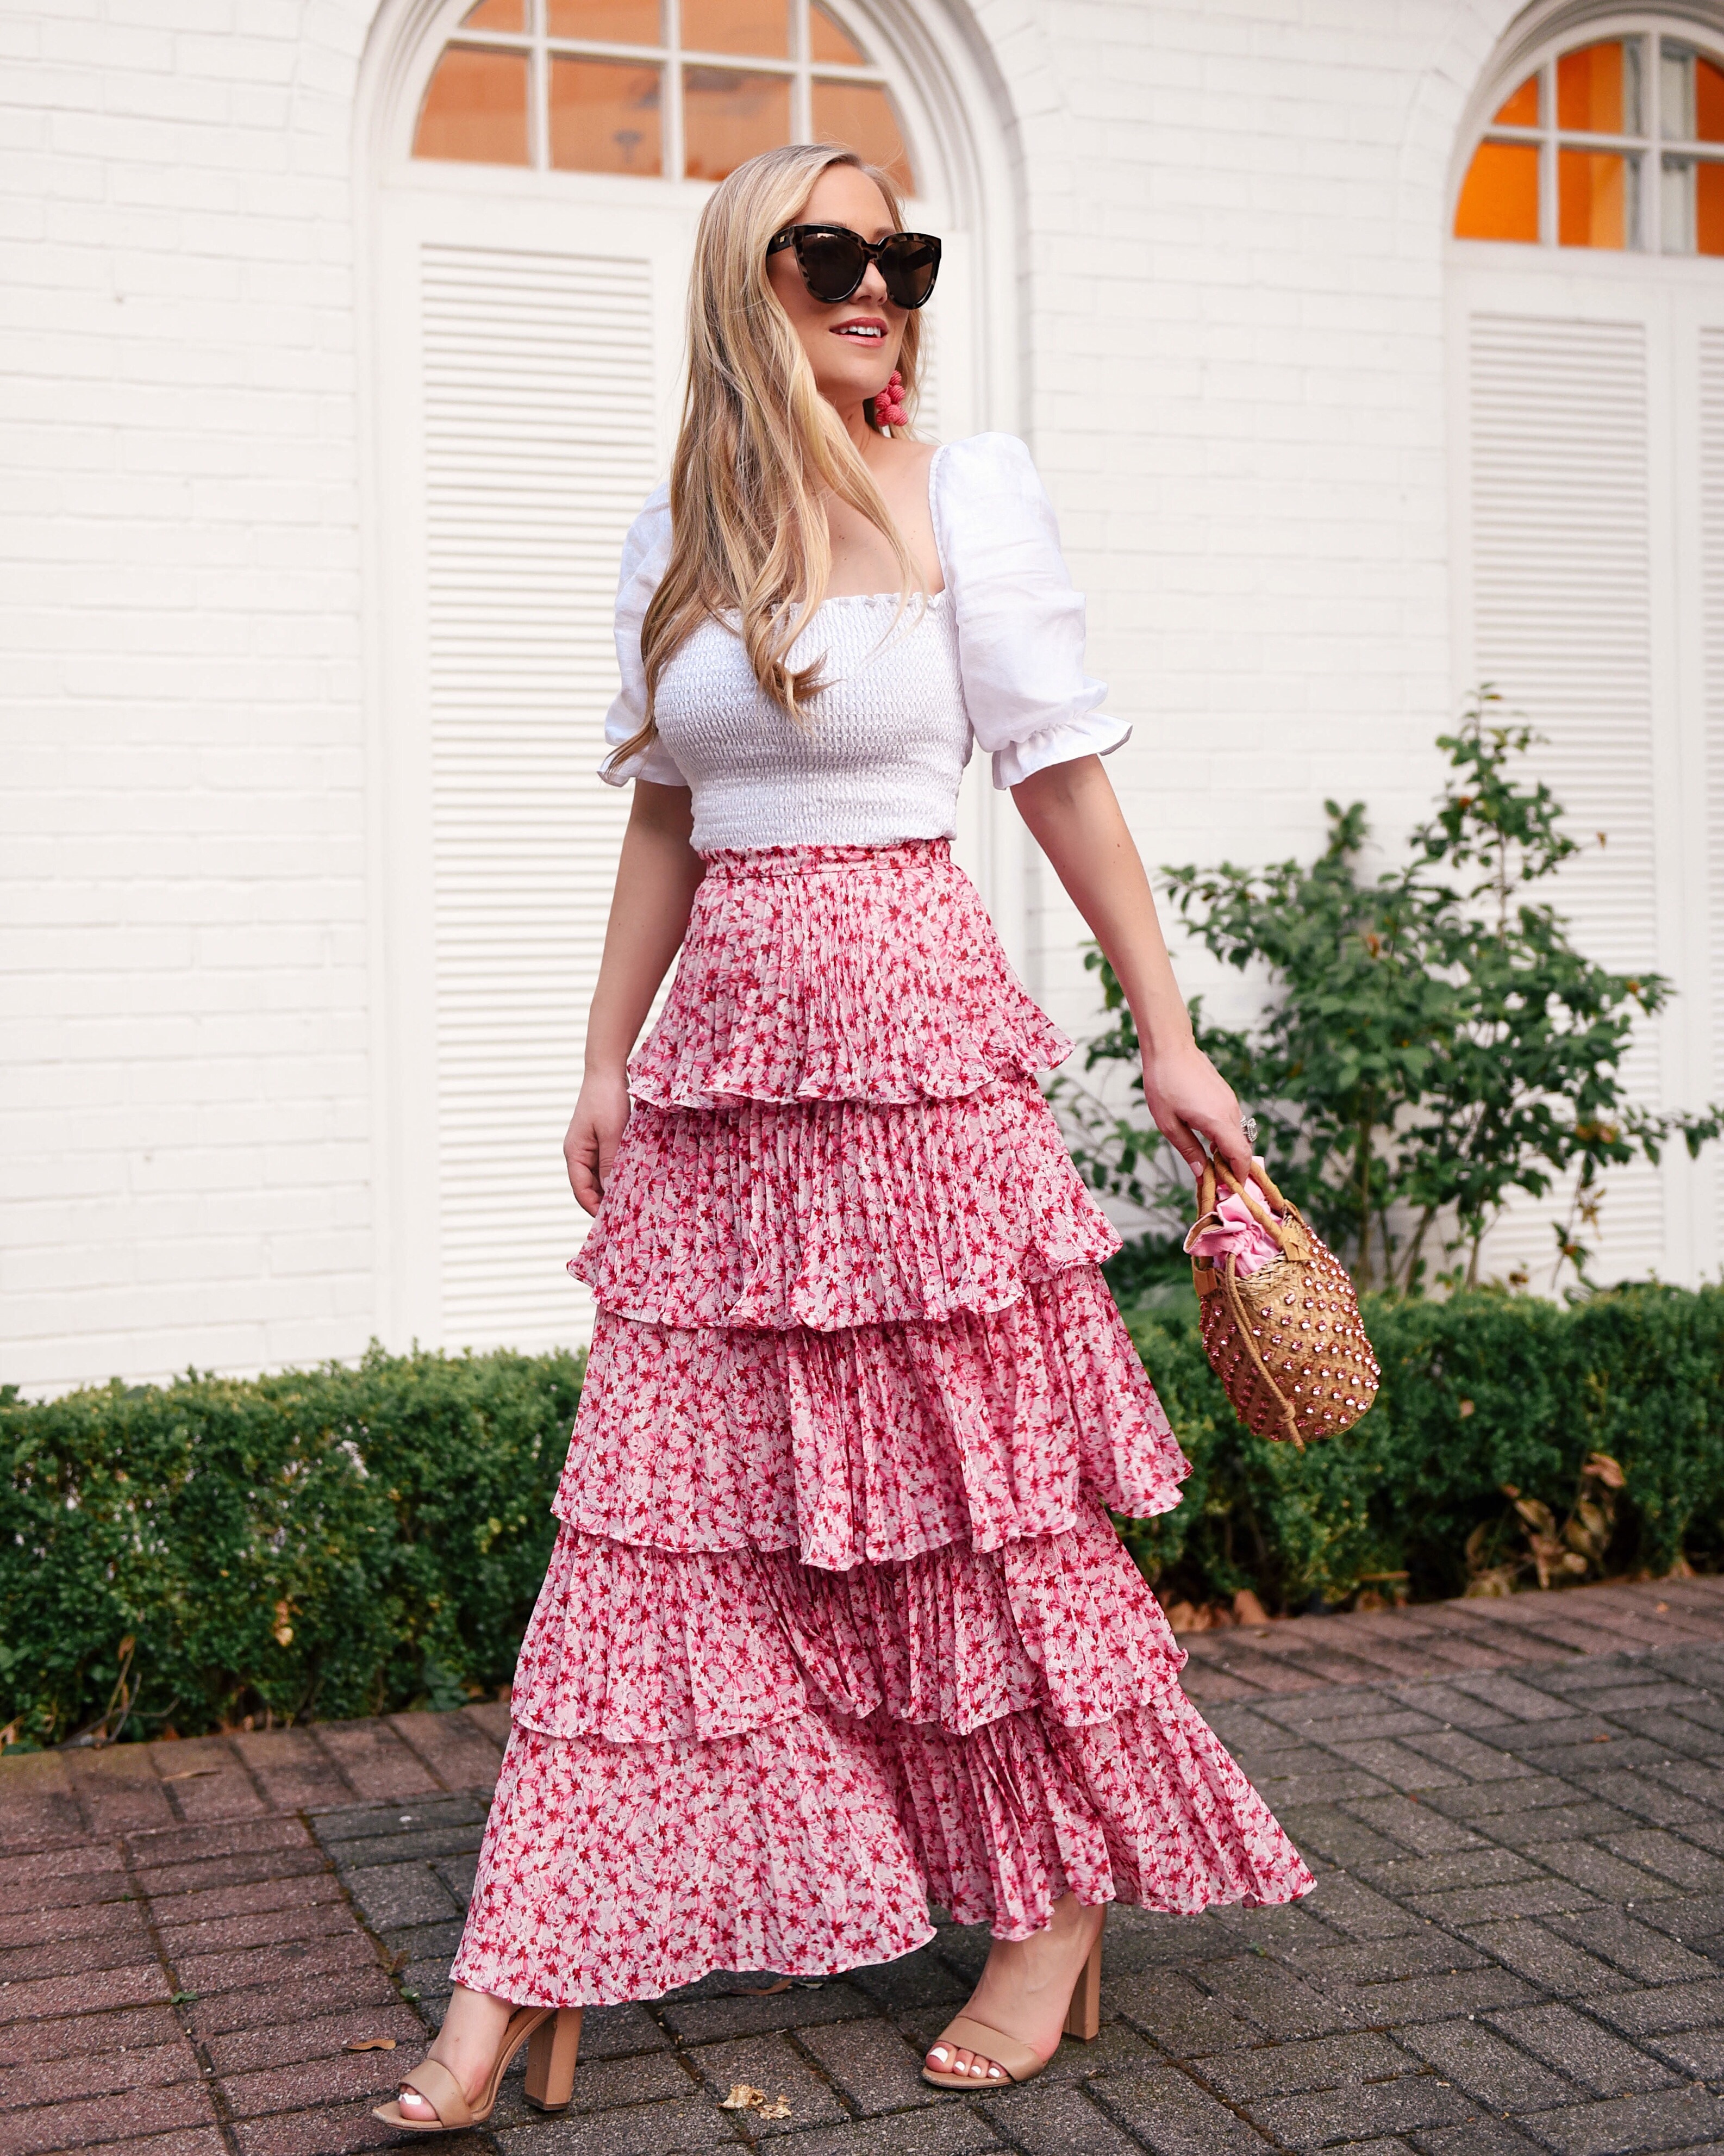 lo-murphy-dallas-blogger-amur-skirt-pink-tierred-skirt-reformation-top-nordstrom-sam-edelman-sandals